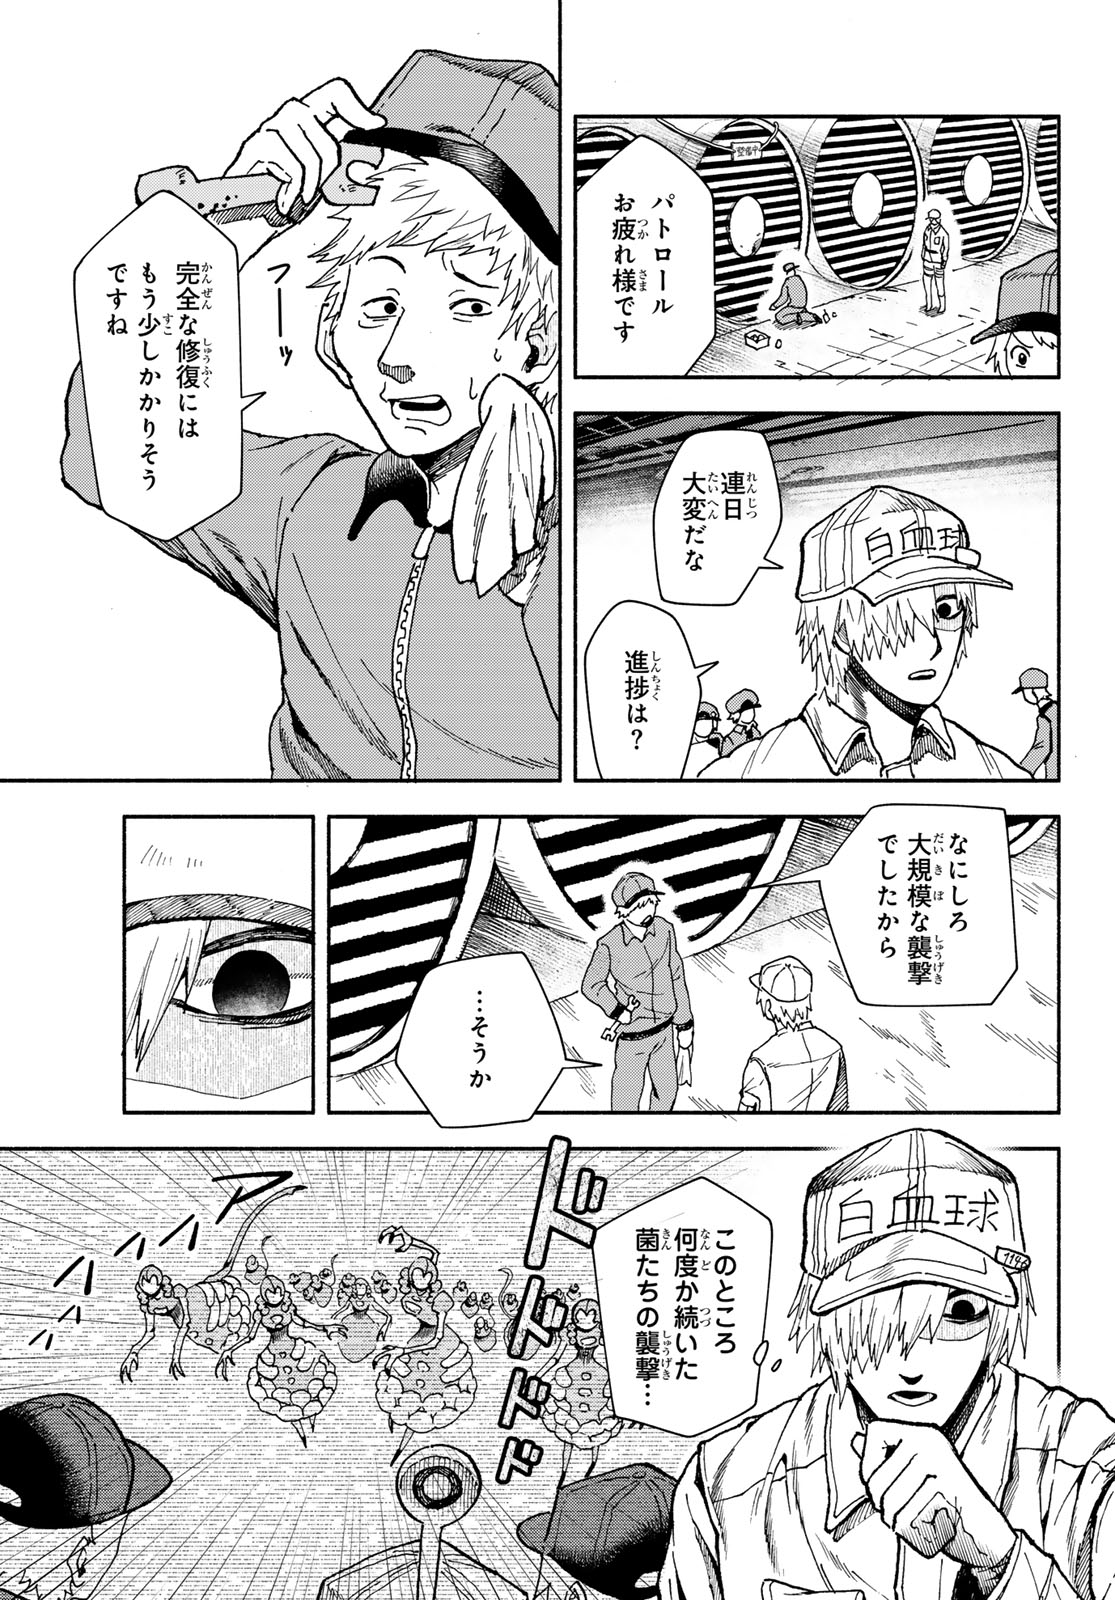 Hataraku Saibou Okusuri - Chapter 9 - Page 3